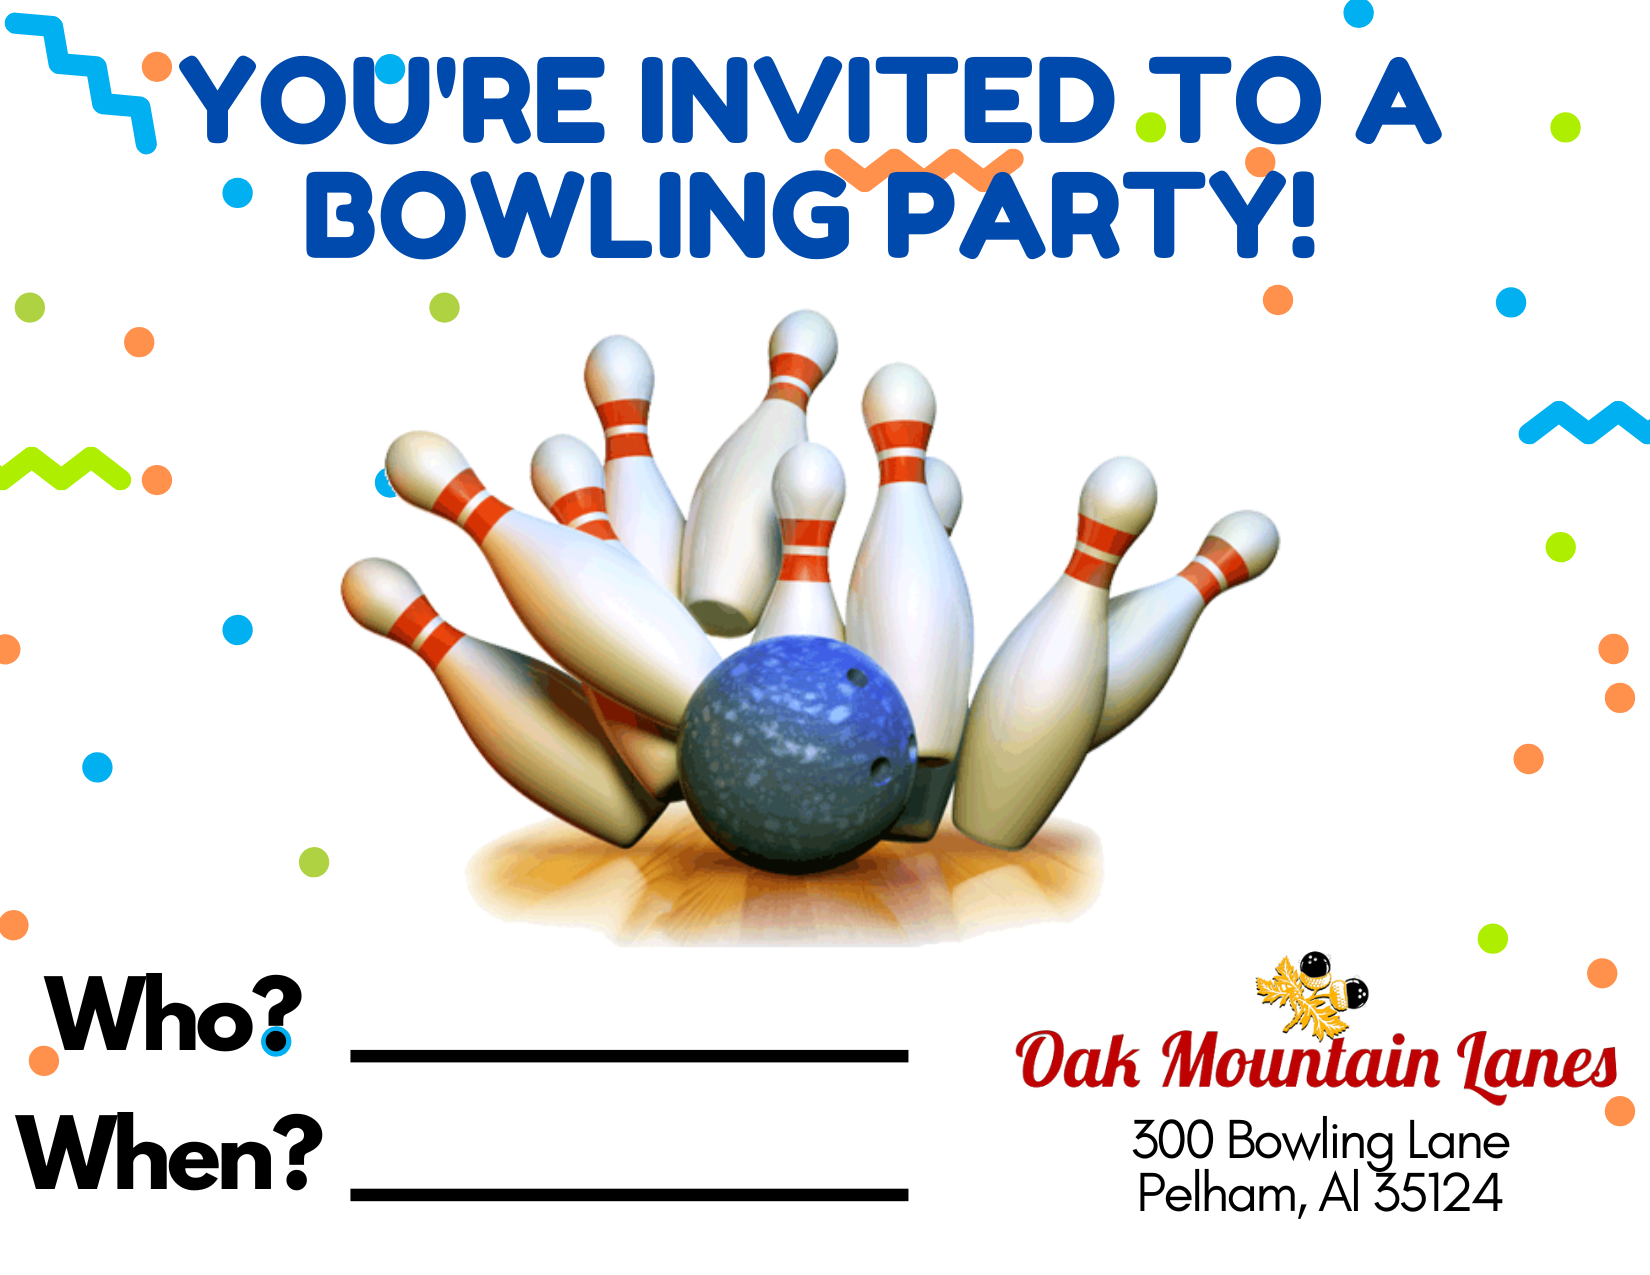 Bowling Invitation image